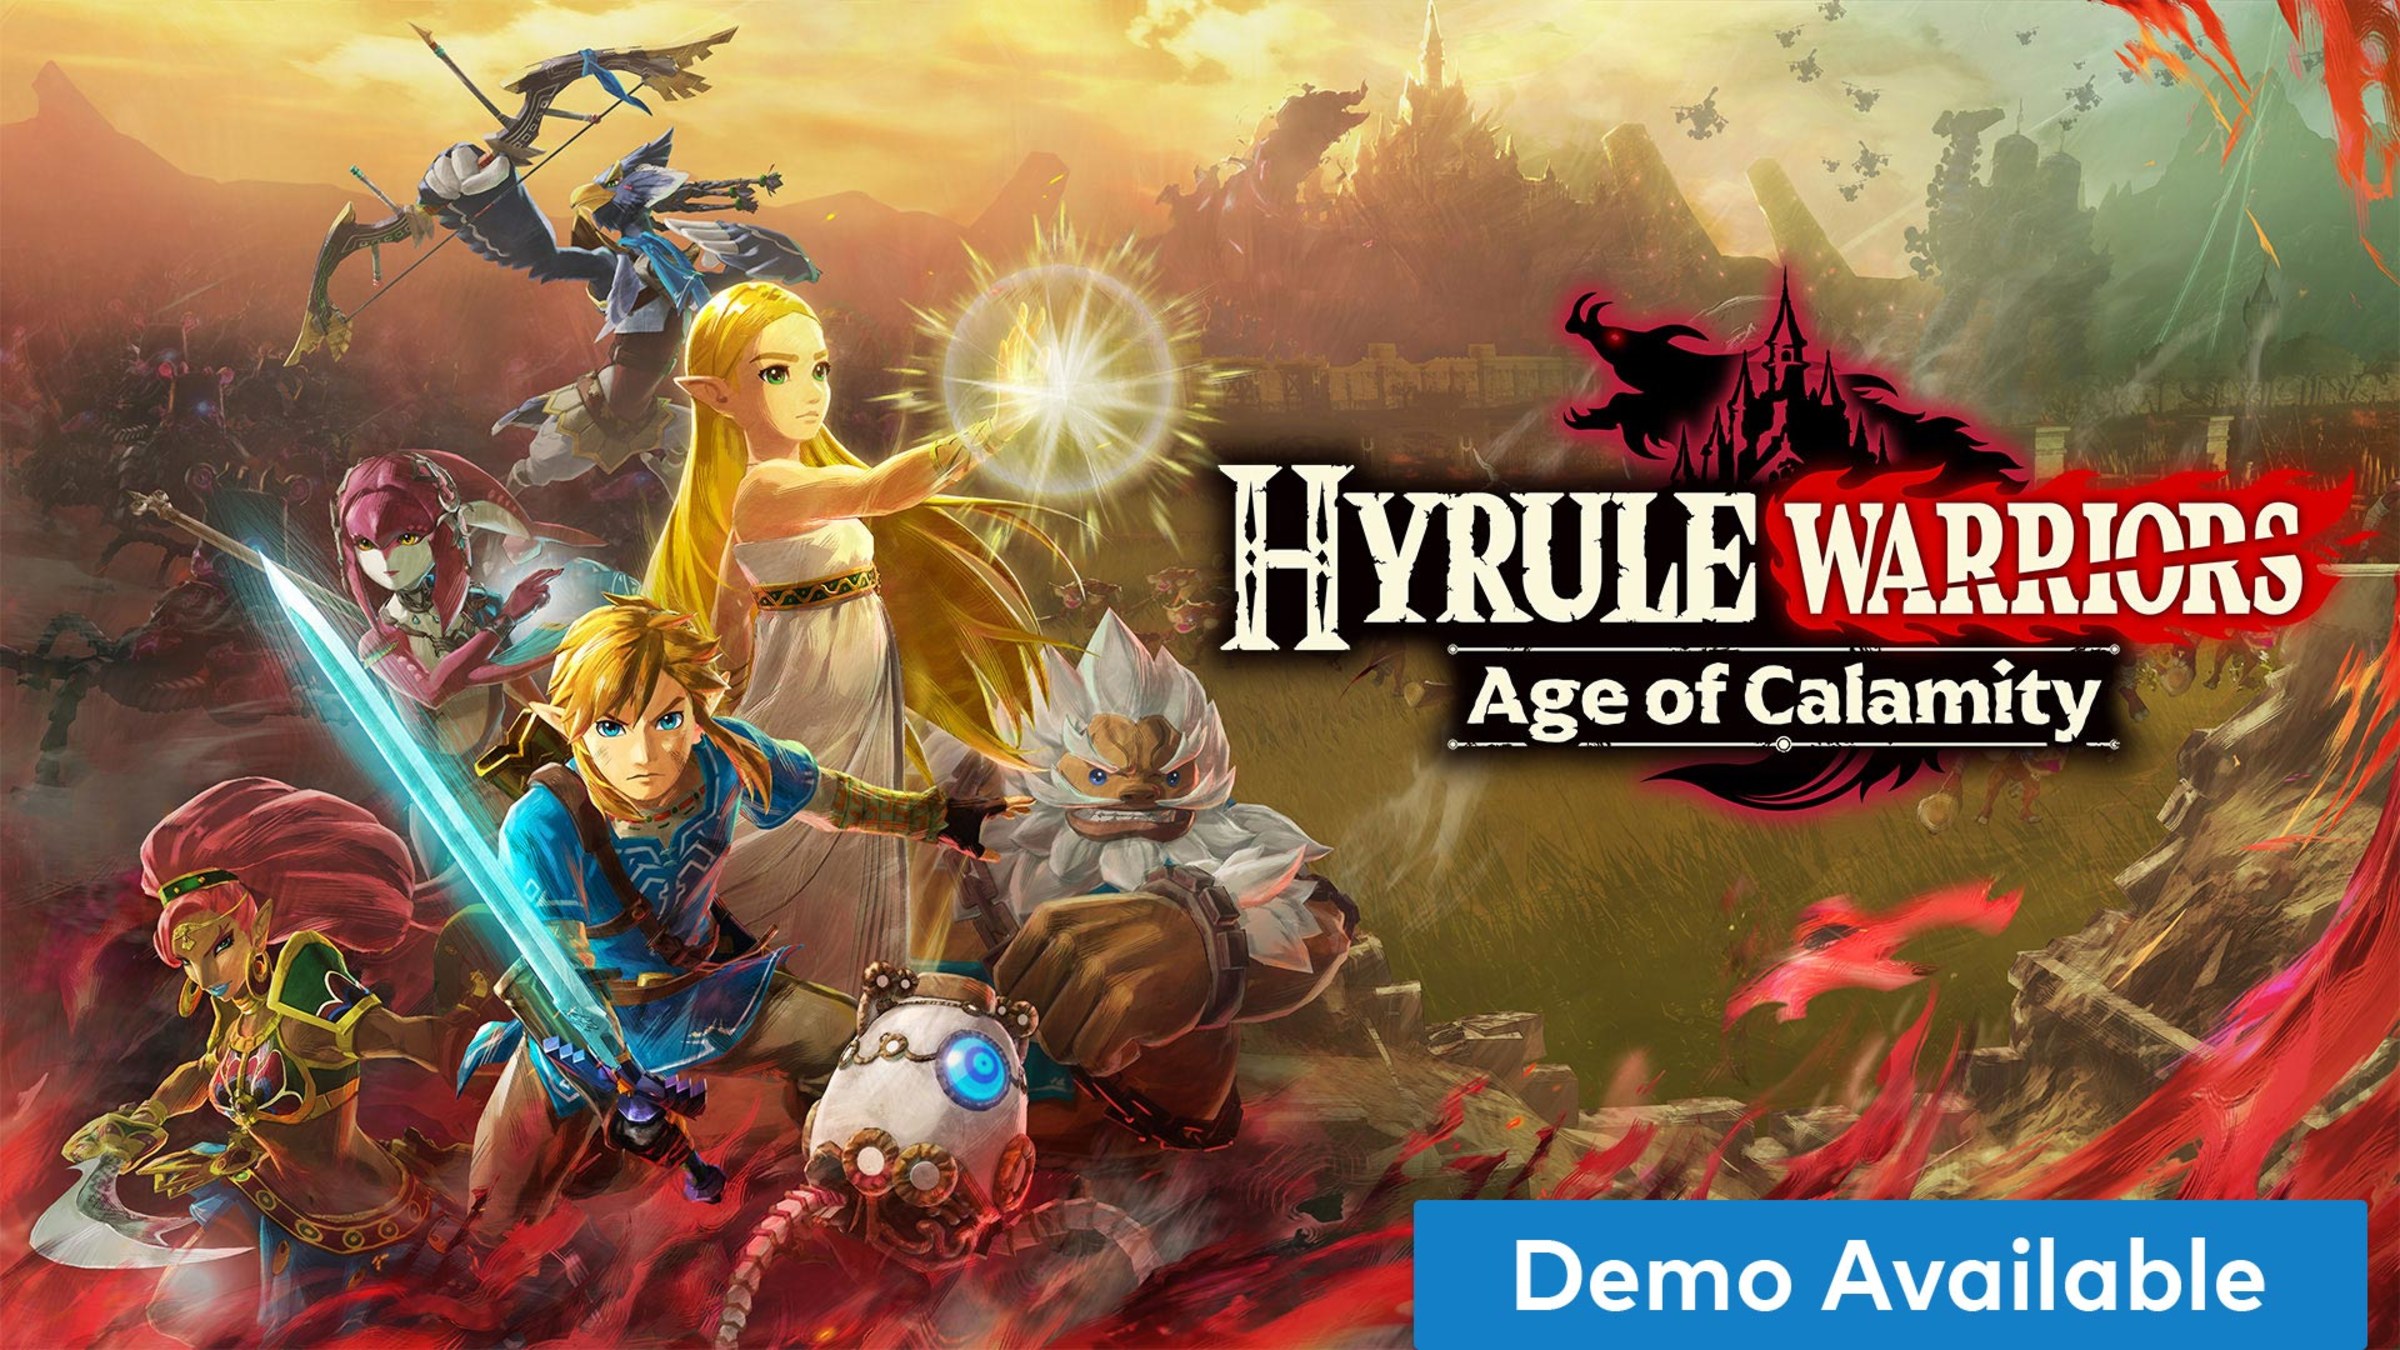 Hyrule Warriors: Definitive Edition - (NSW) Nintendo Switch (Japanese